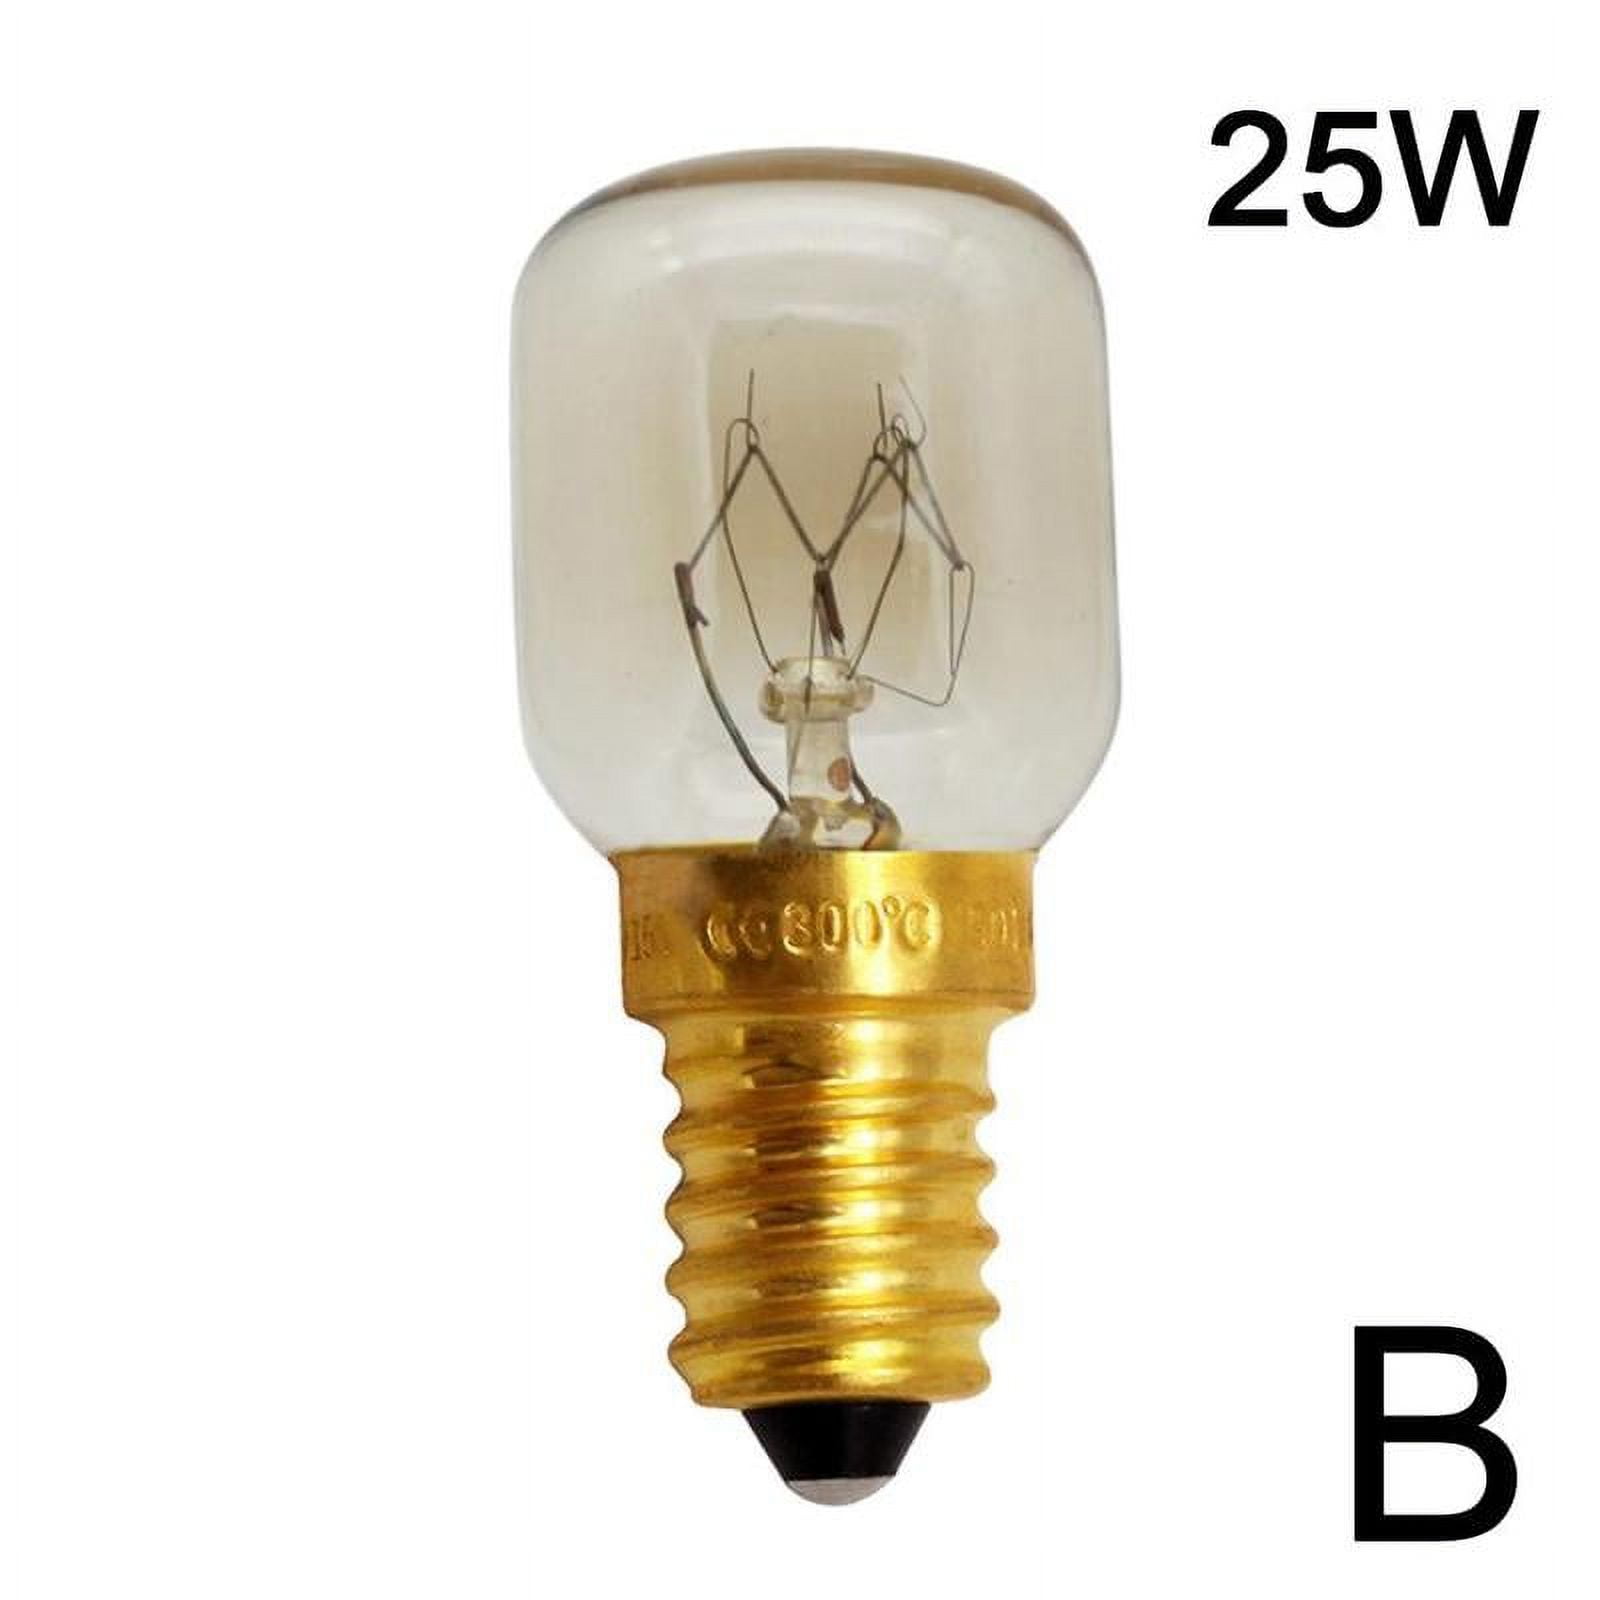 E14 Screw 220V 15W Small Lamp Bulb 110V 24V Incandescent Lamp for  Refrigerator/Pumping Unit/Microwave Oven Night Lighting 5pcs